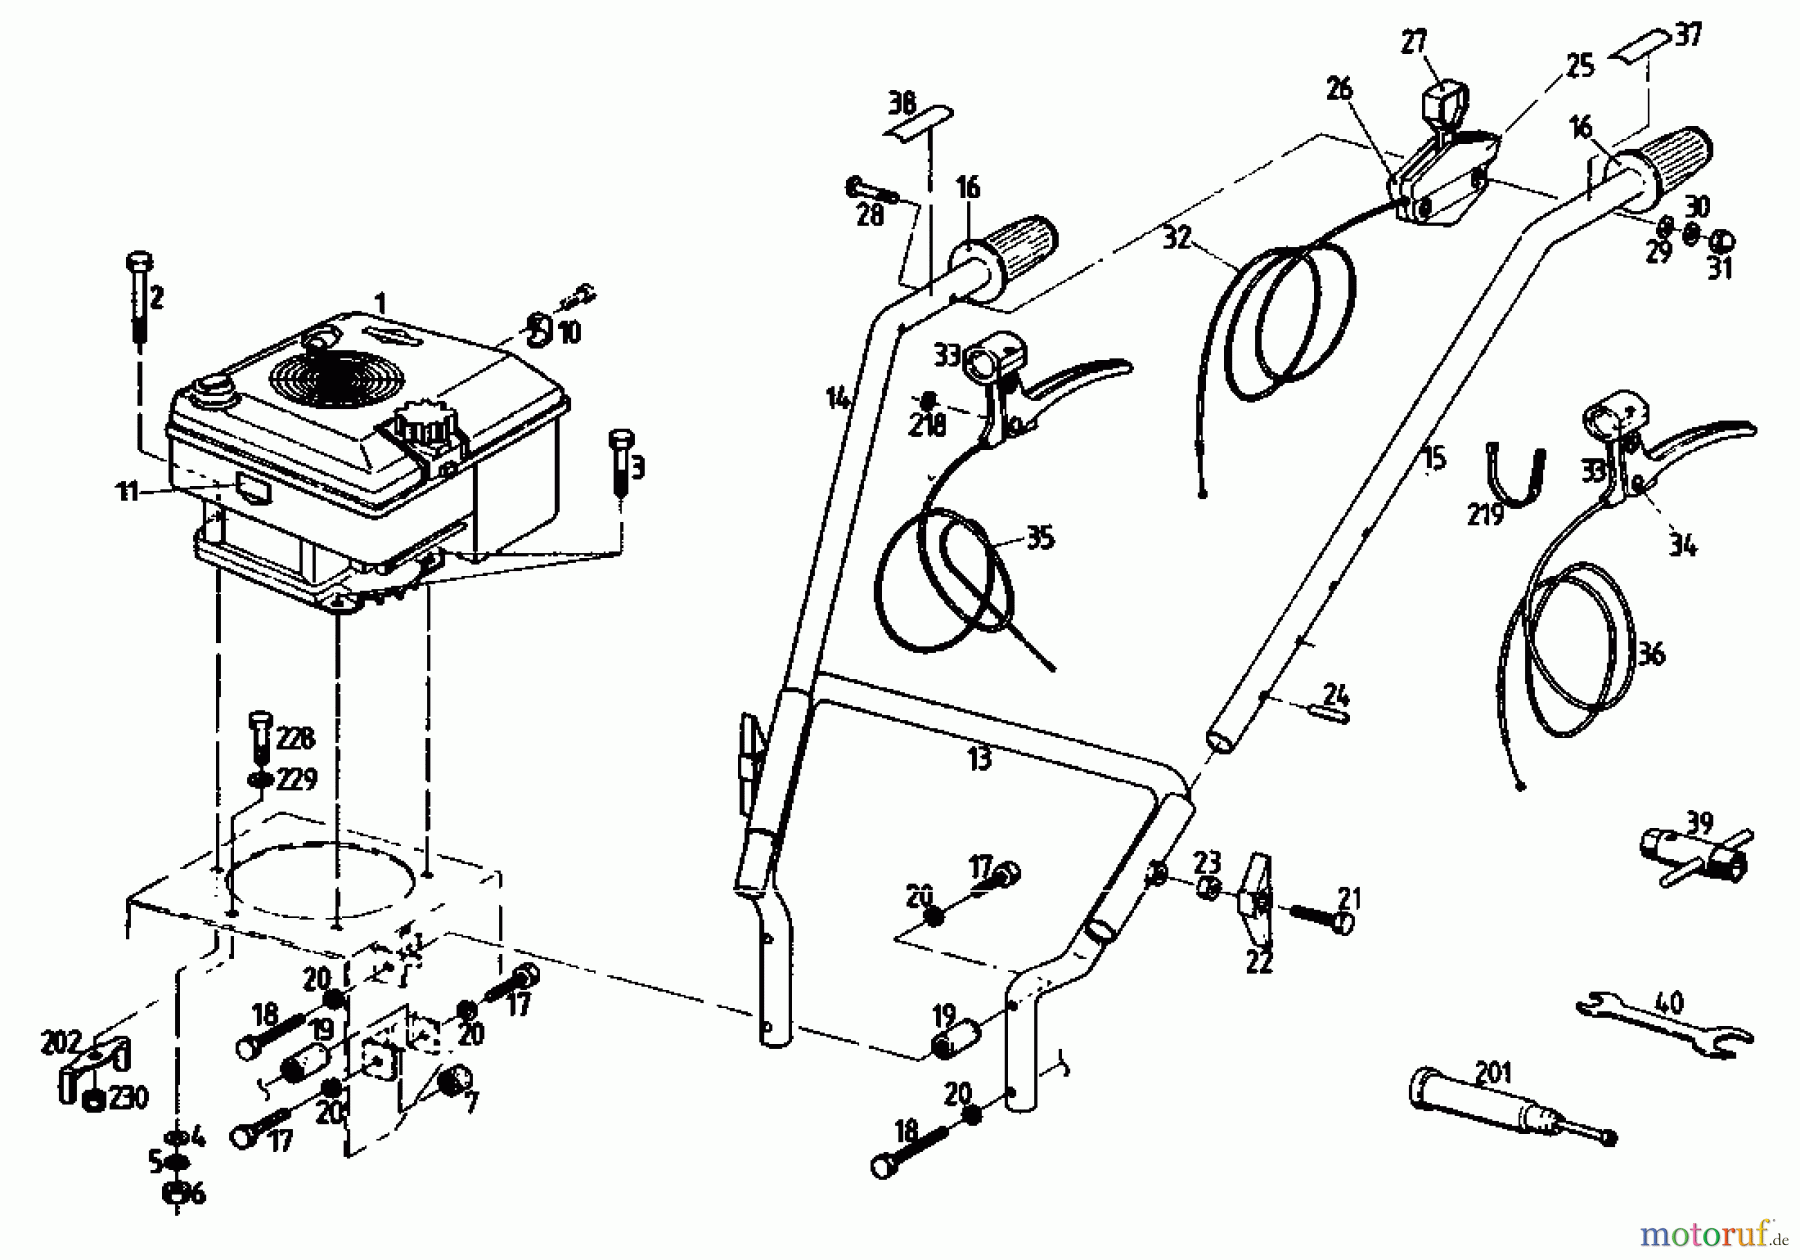  Gutbrod Cutter bar mower BM 710 07515.03  (1993) Handle